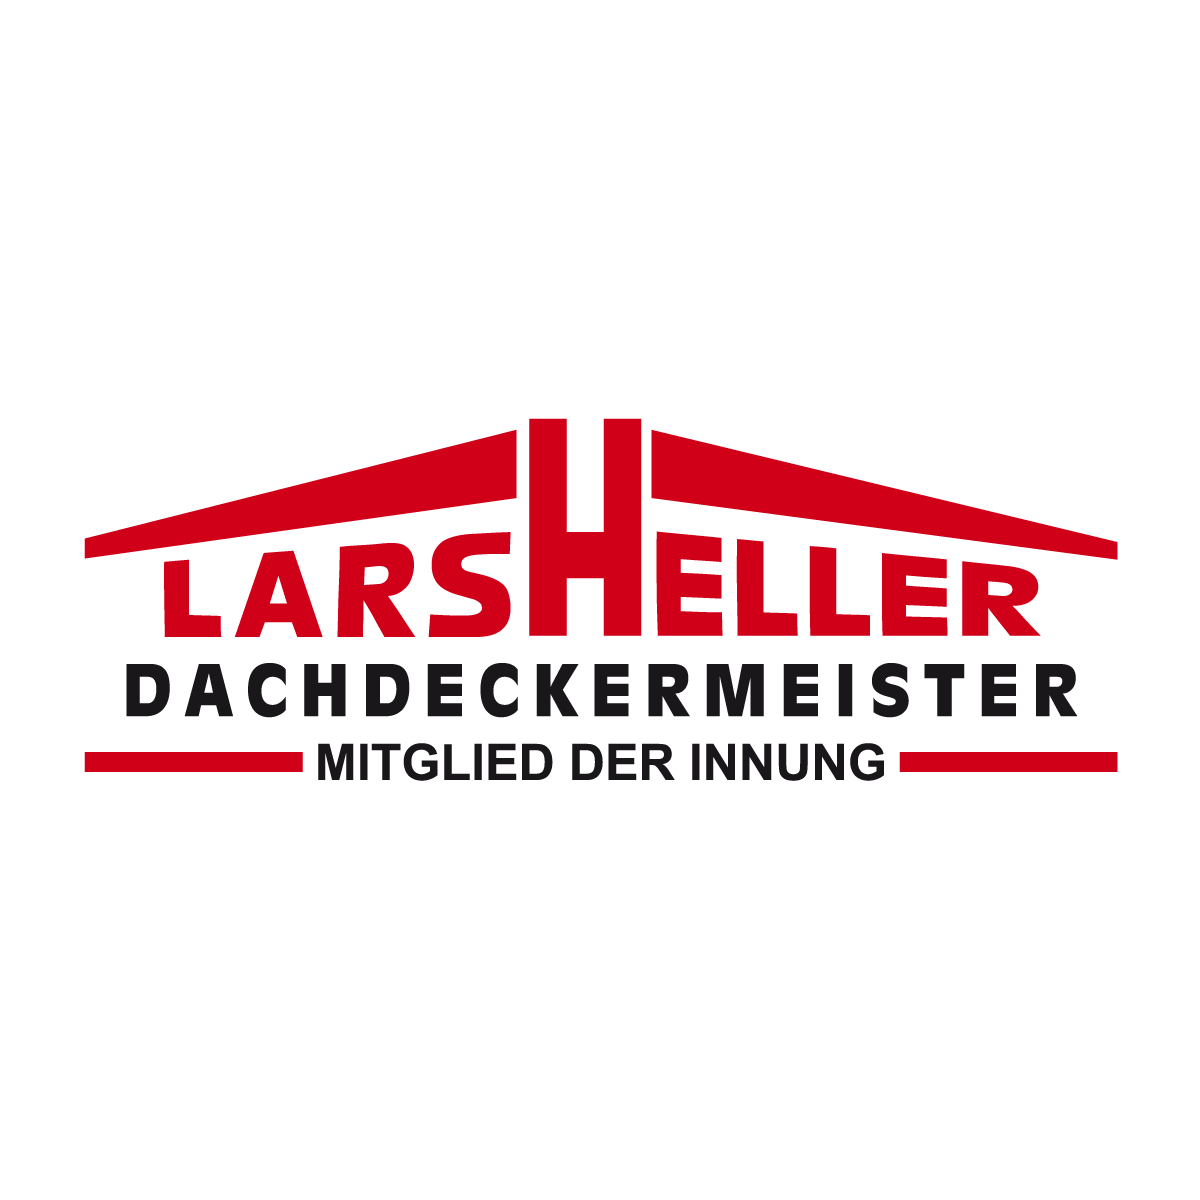 Lars Heller Dachdeckermeister GmbH & Co. KG in Ottendorf Okrilla - Logo